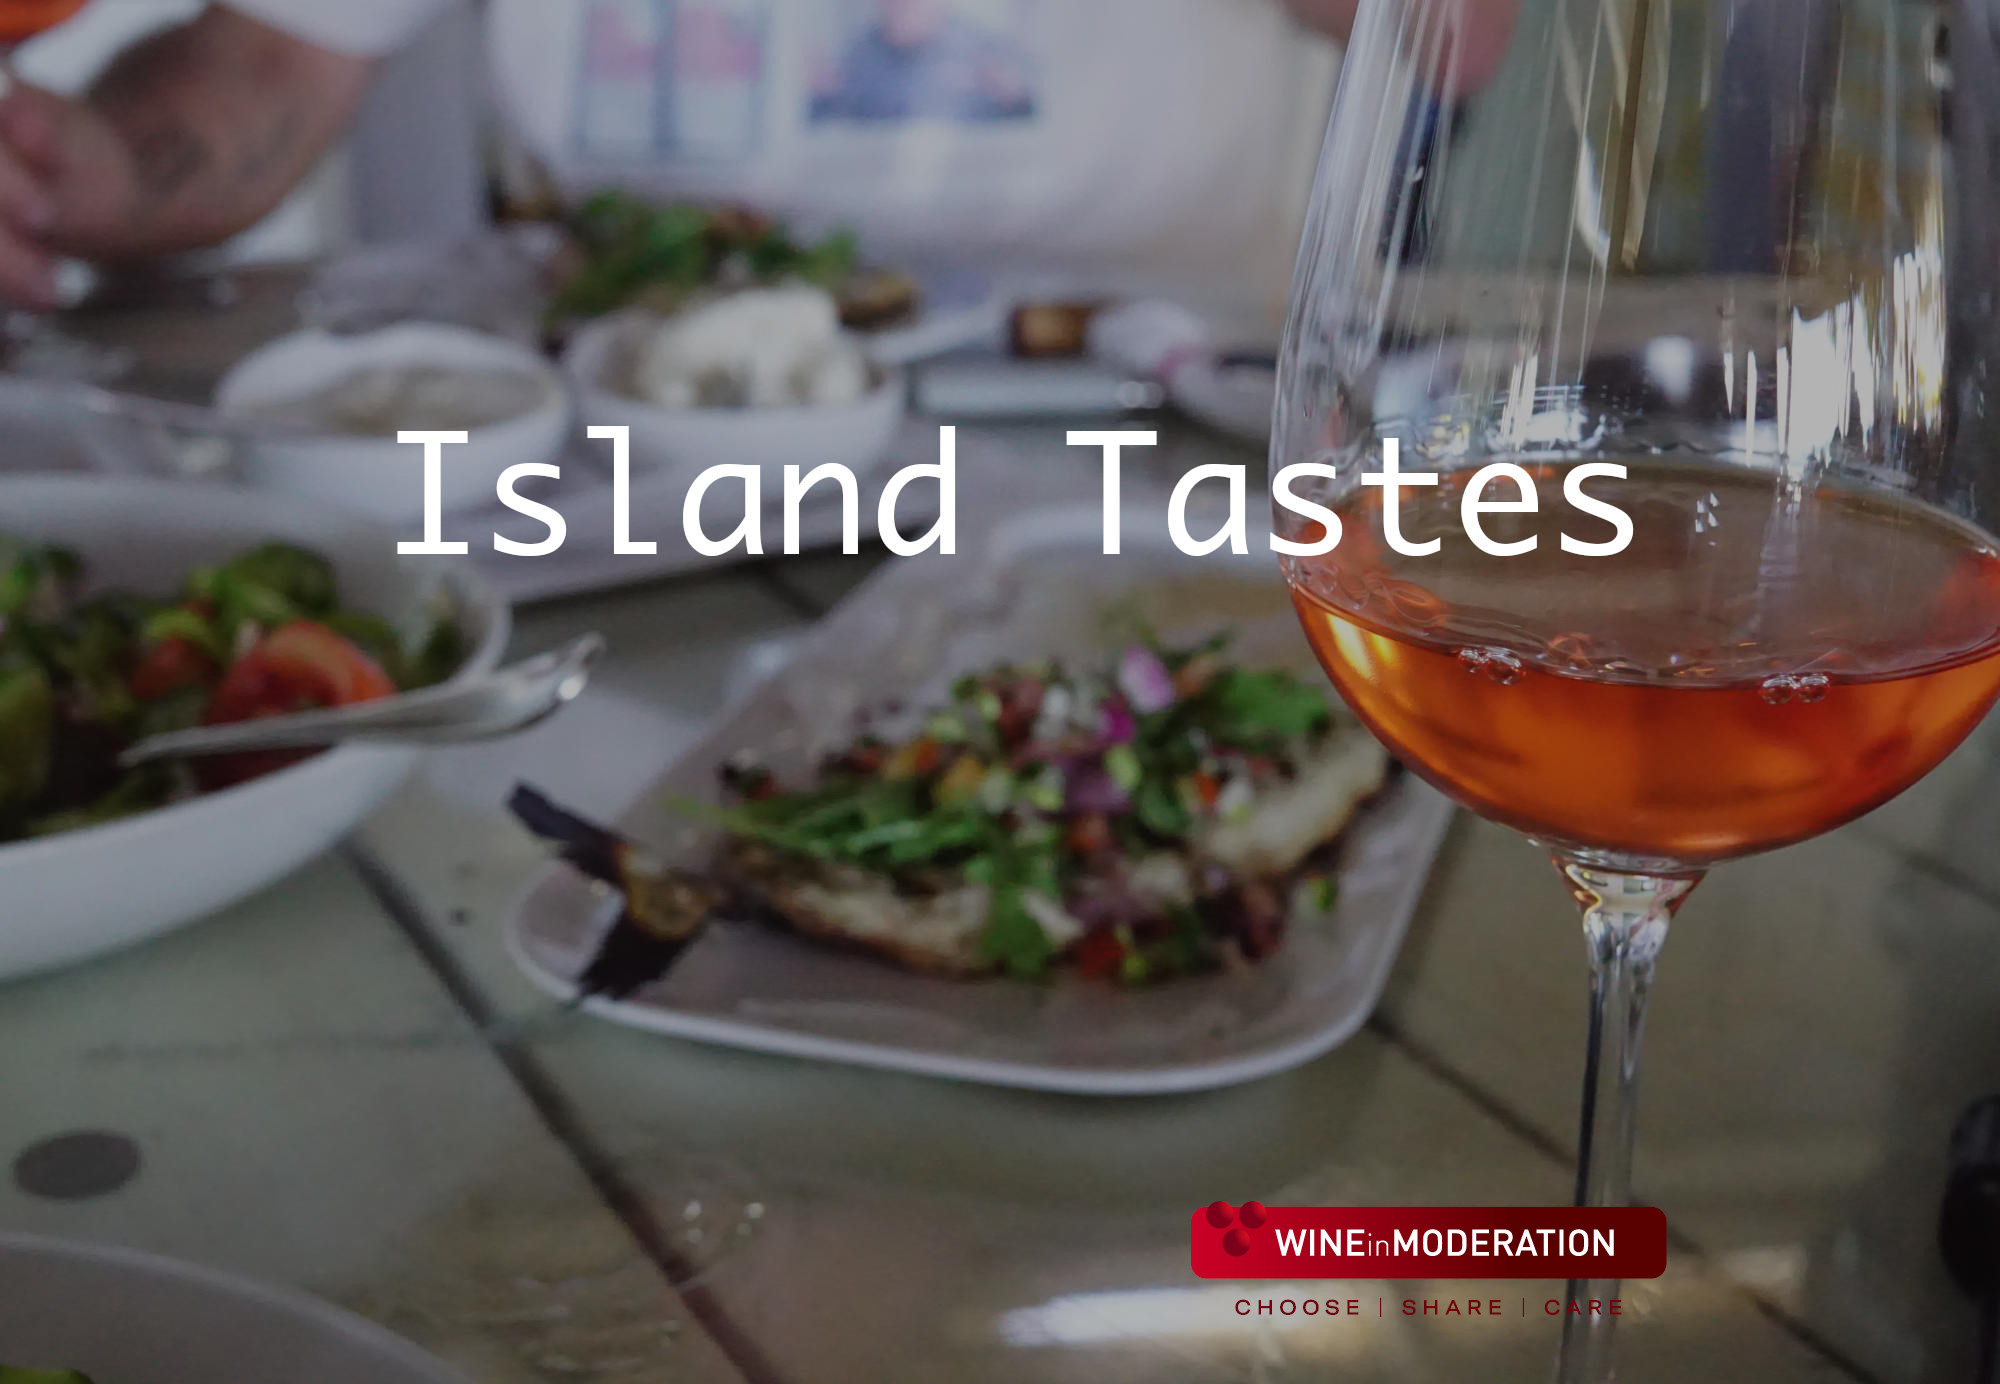 Island Tastes in Moderation